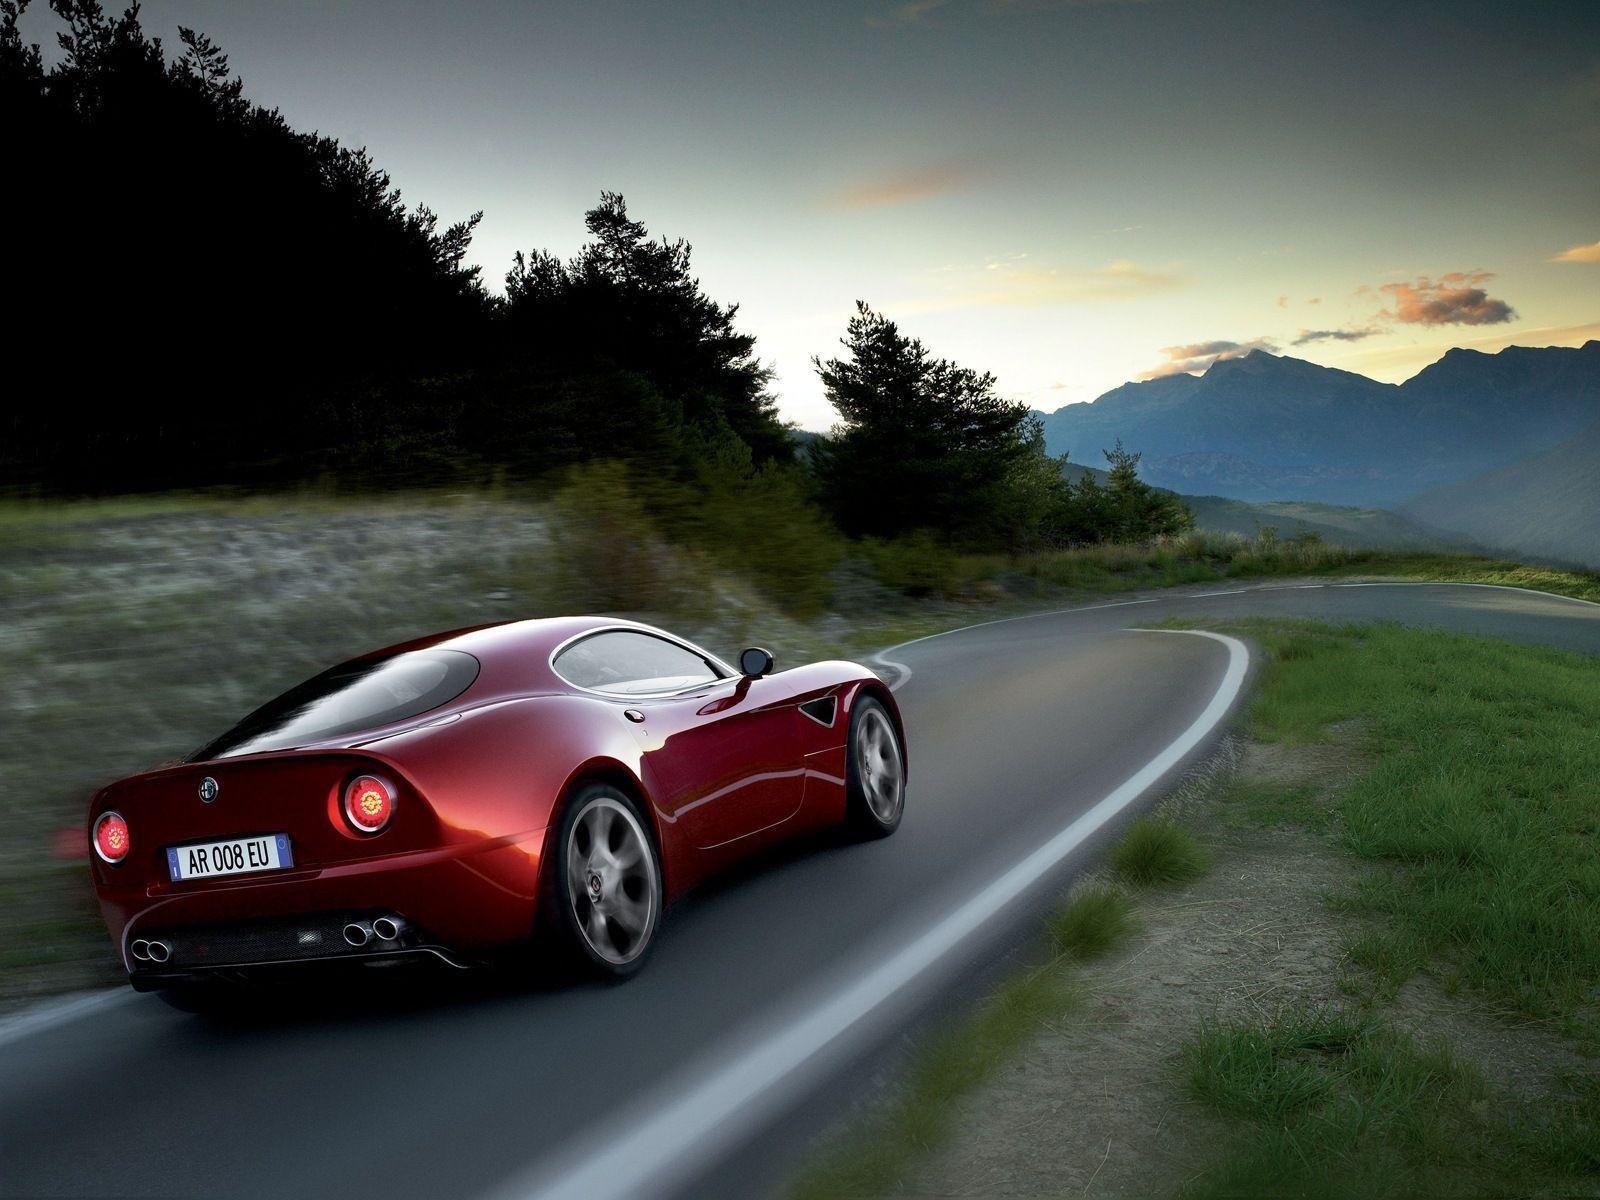 Alfa Romeo Picture, Wallpaper, Photo & Quality Image